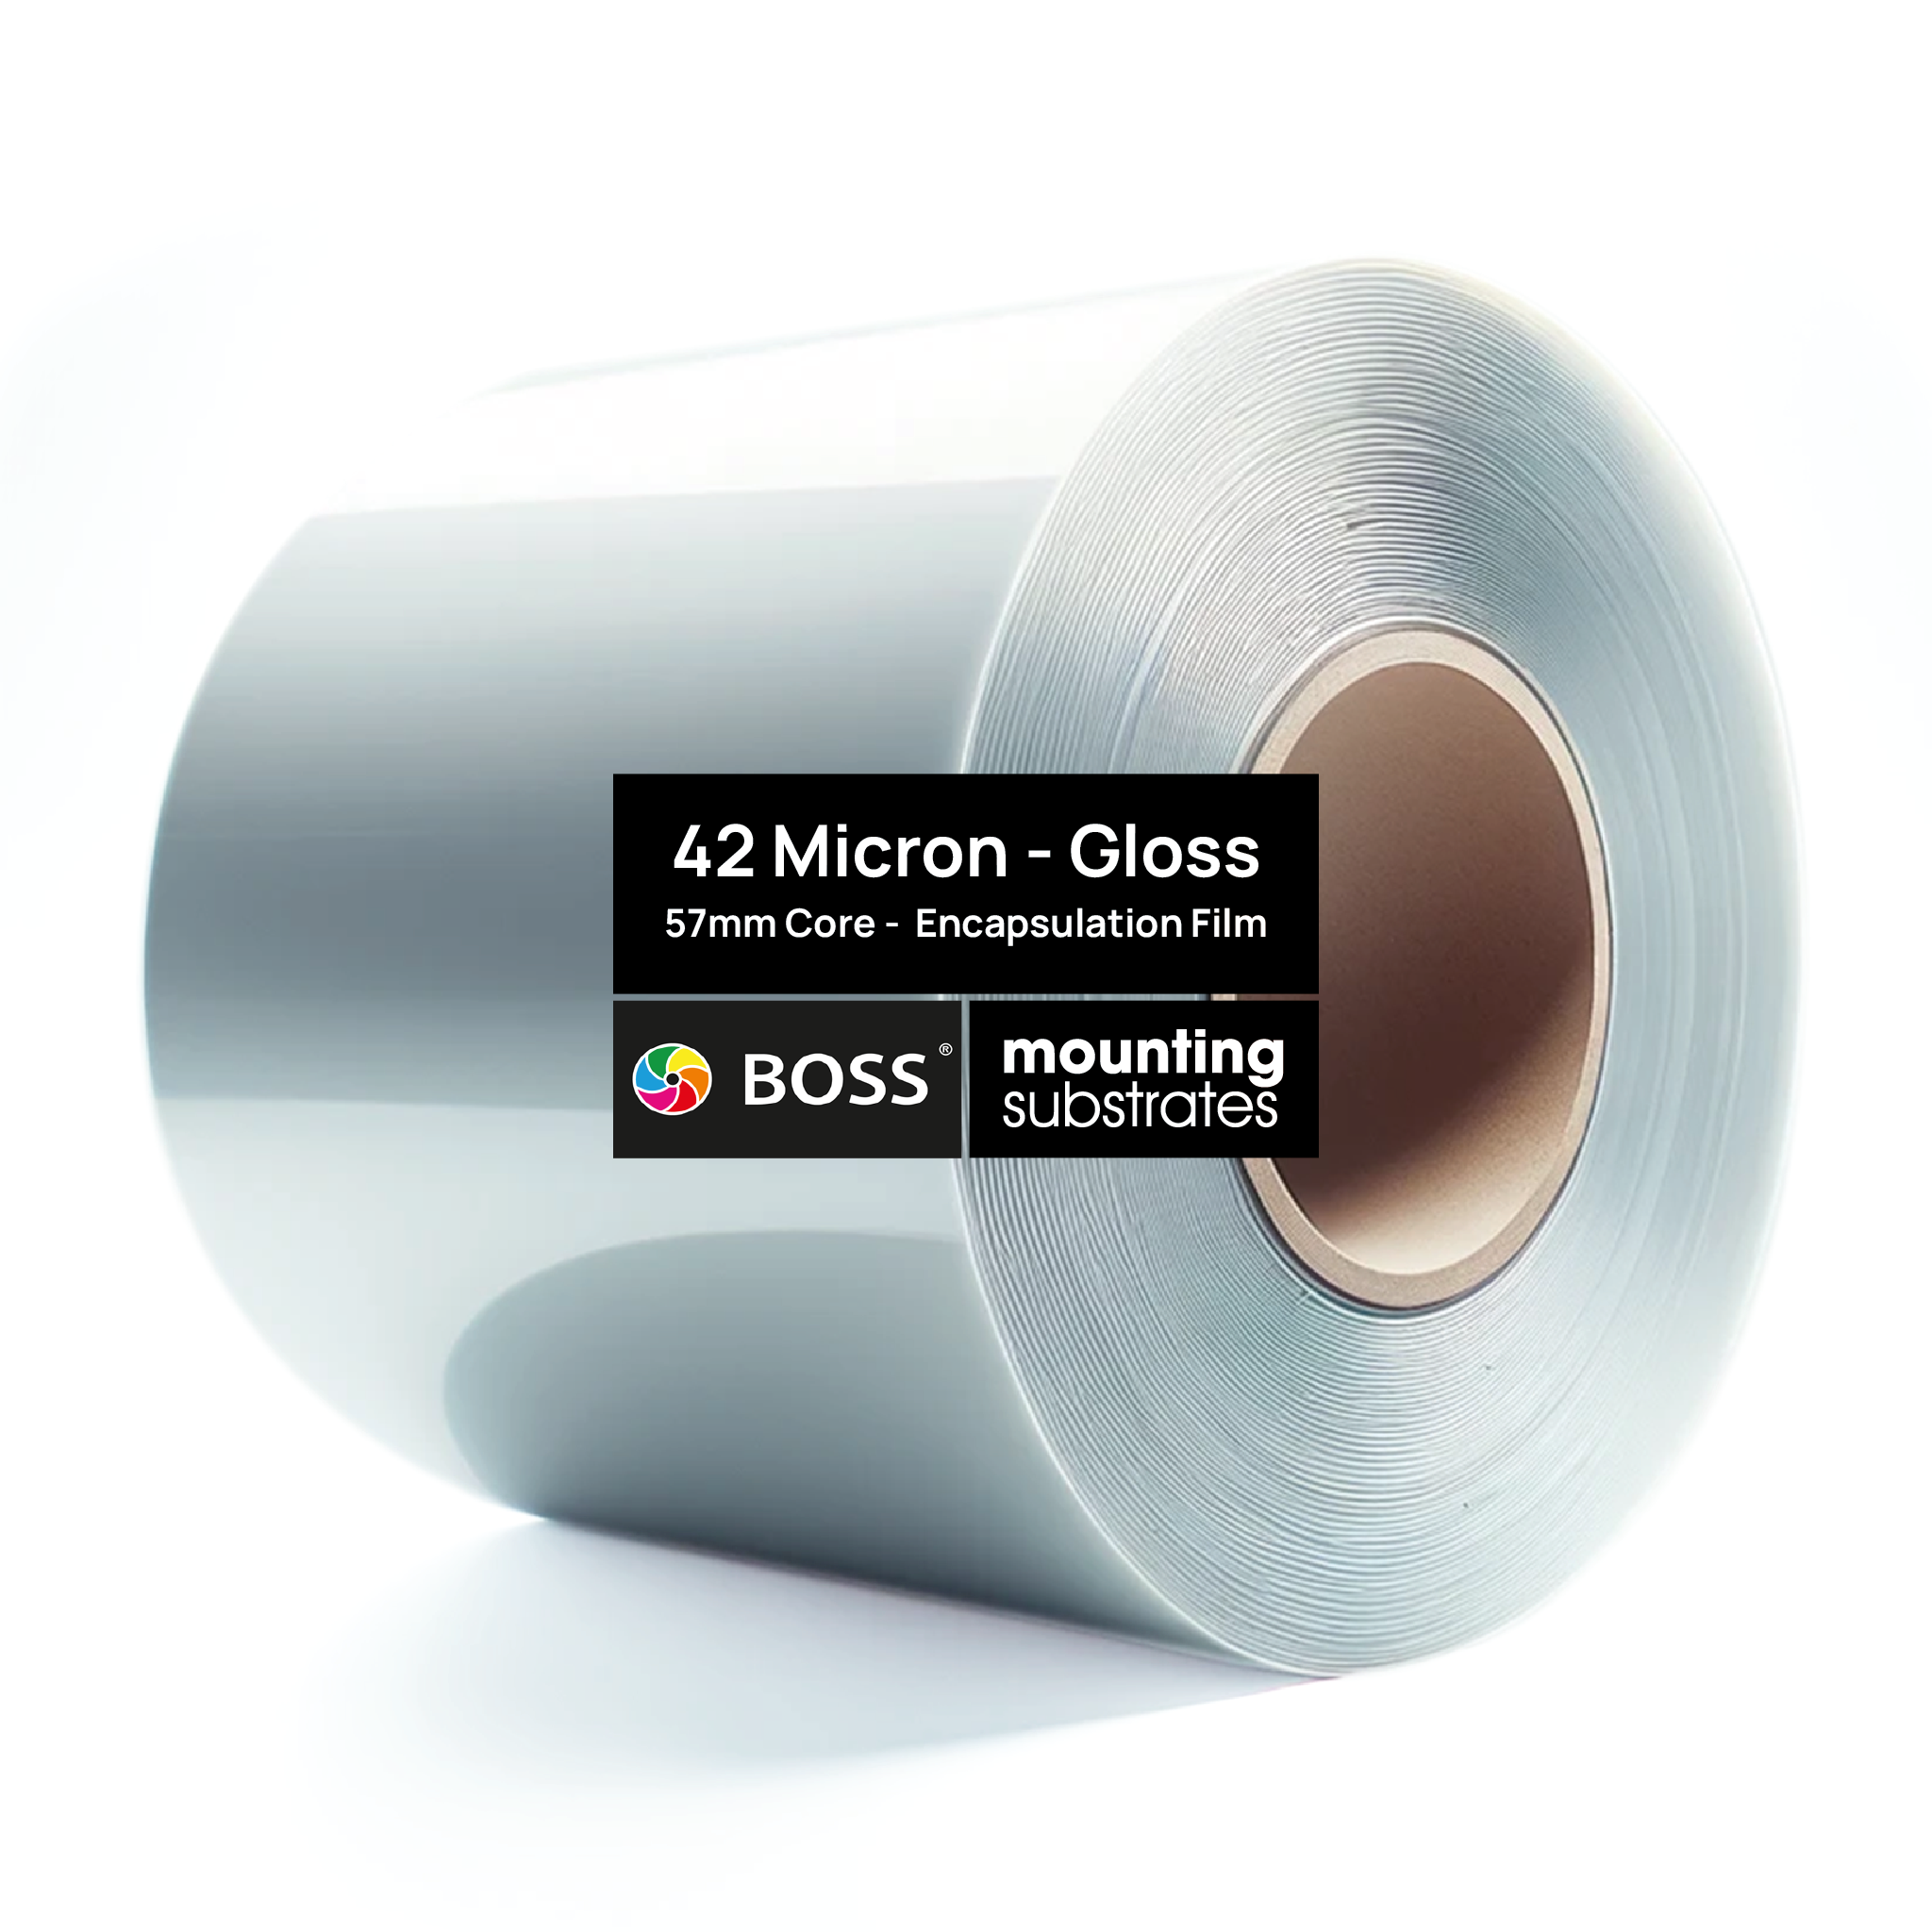 Gloss 42 micron Encapsulation Film - Boss Low Melt Laminate Gloss - 57mm Core